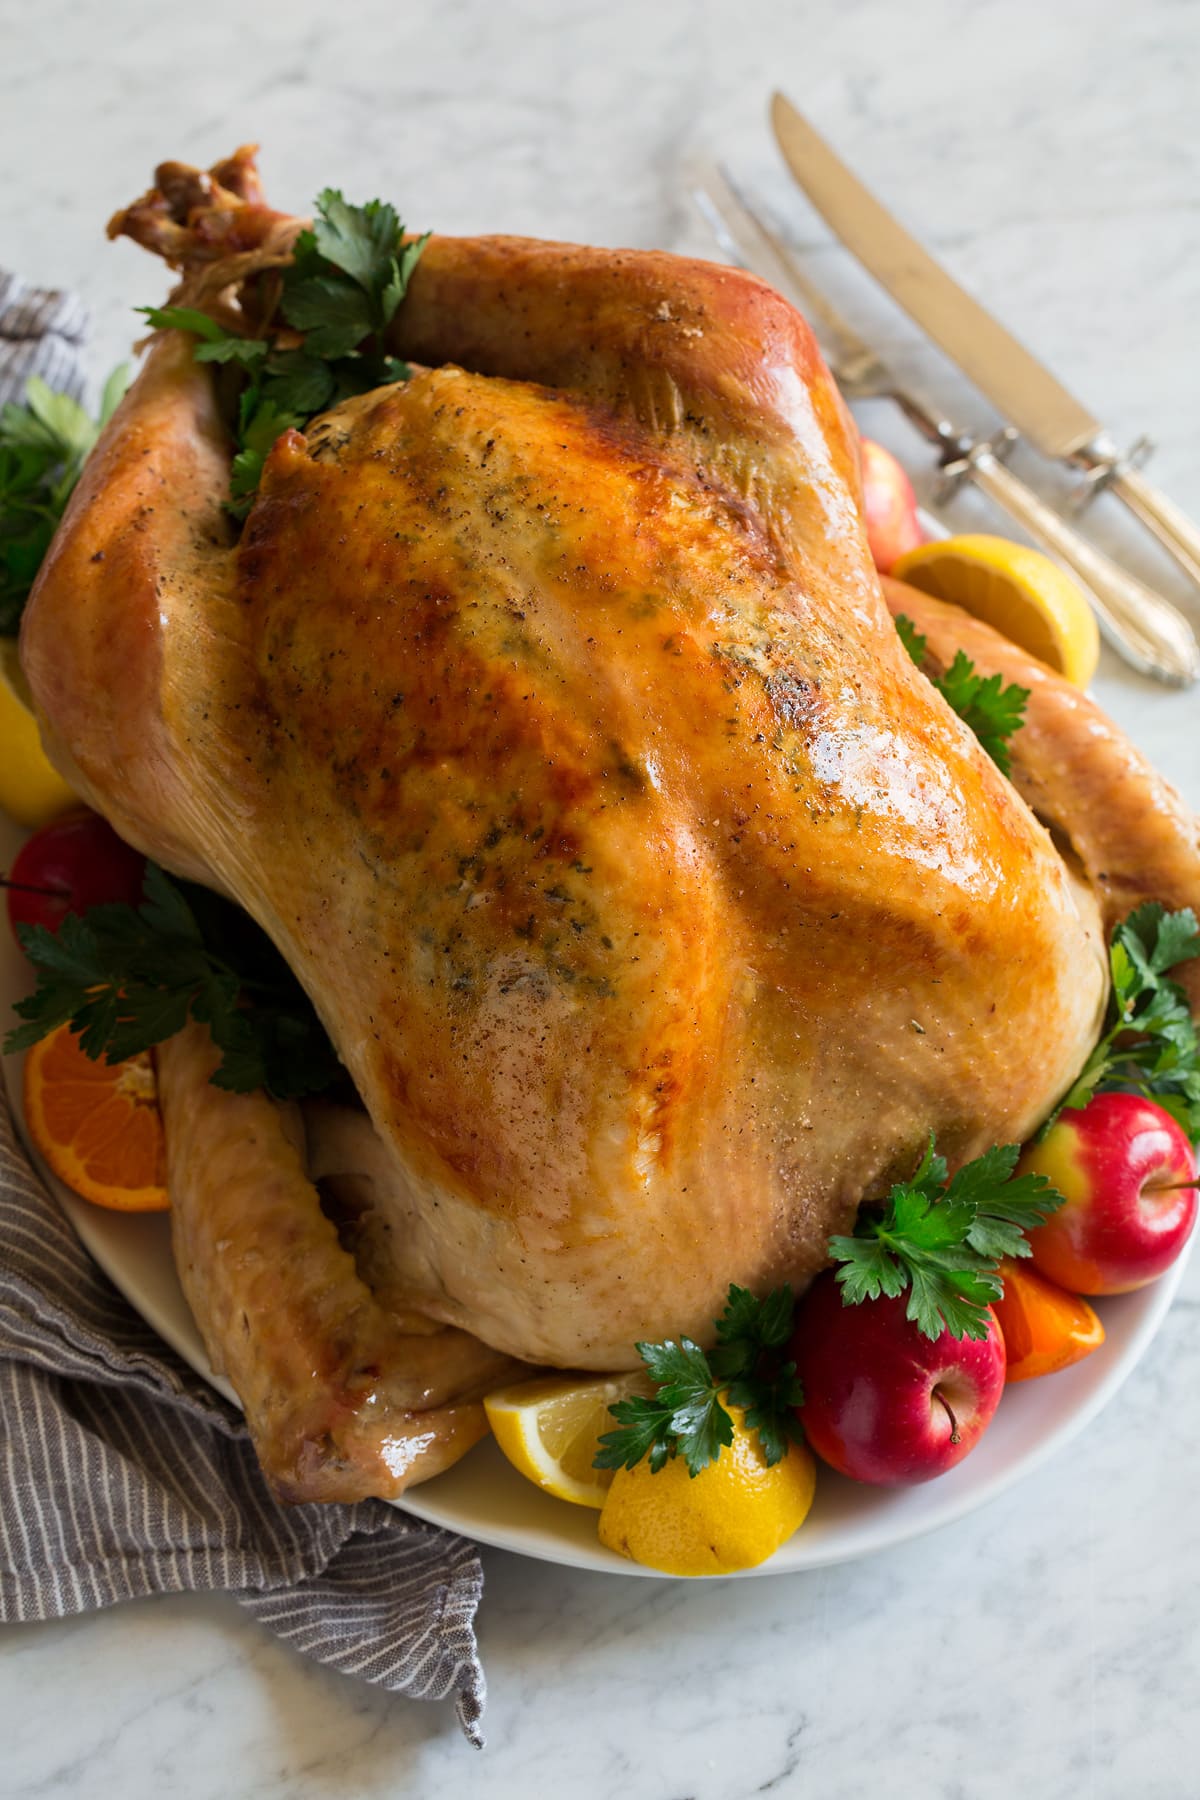 https://www.cookingclassy.com/wp-content/uploads/2019/11/oven-bag-turkey-9.jpg